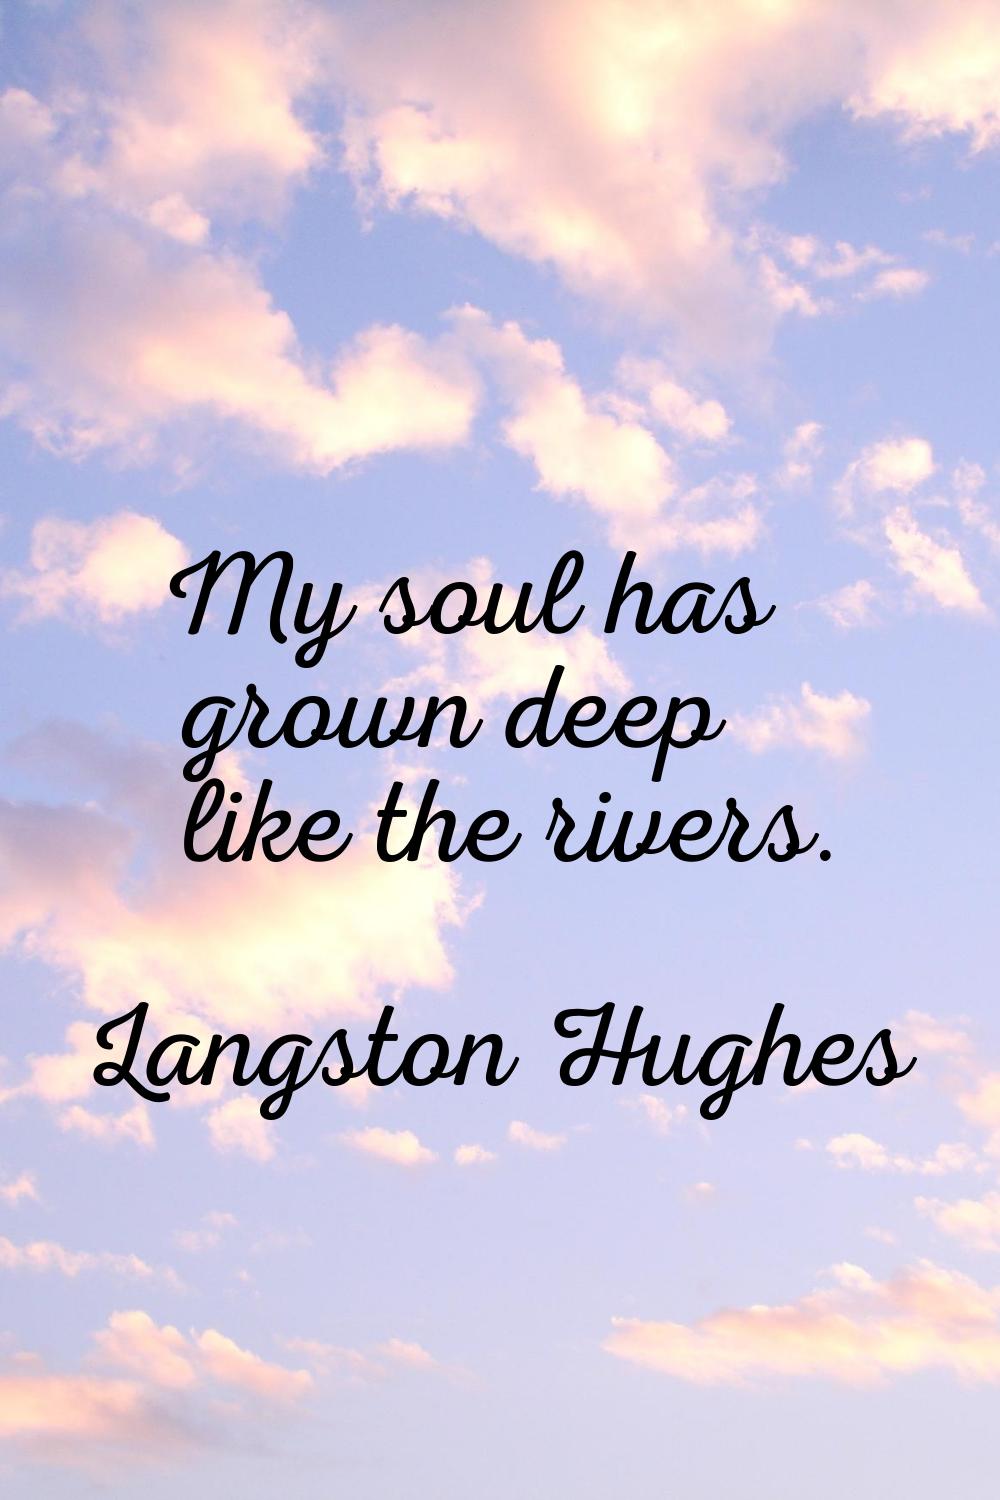 My soul has grown deep like the rivers.